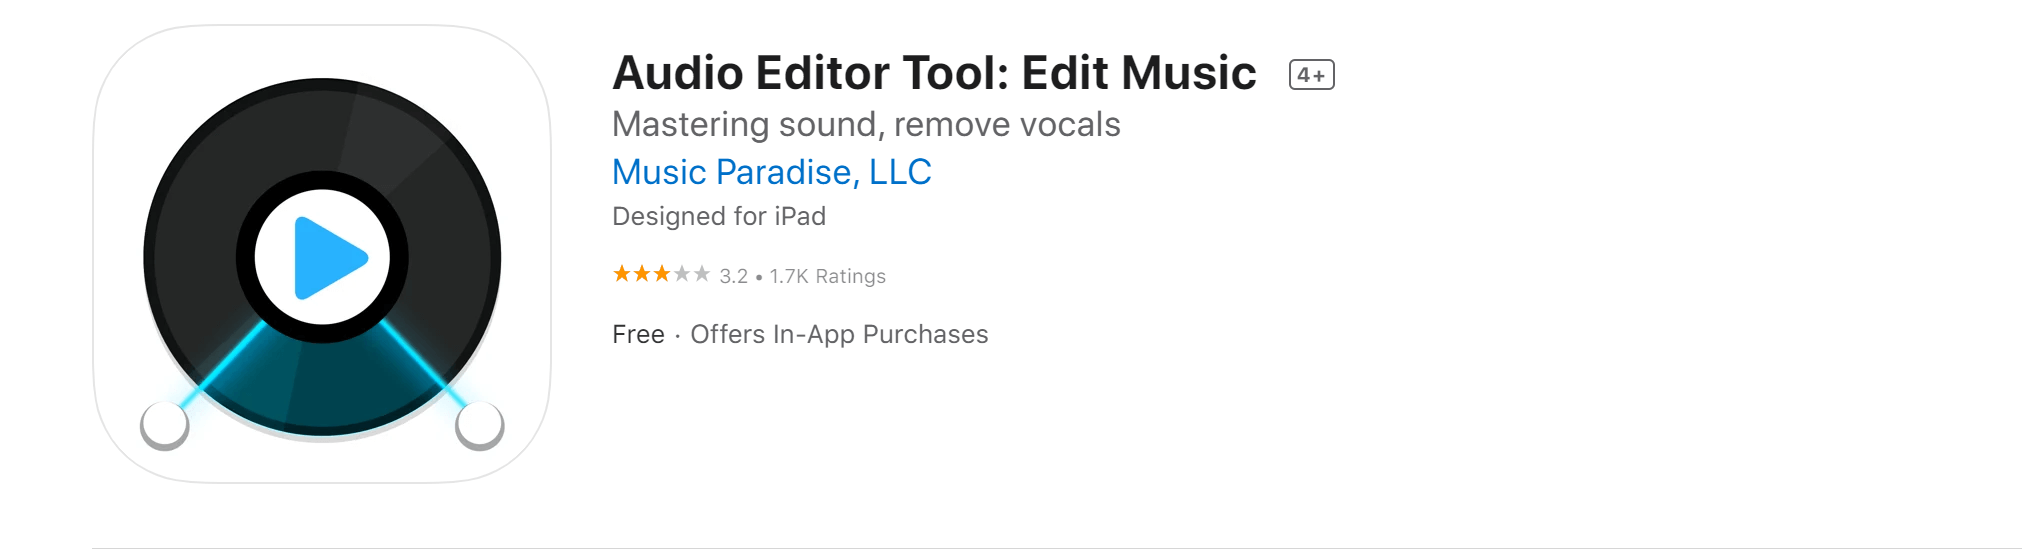 audio editor tool